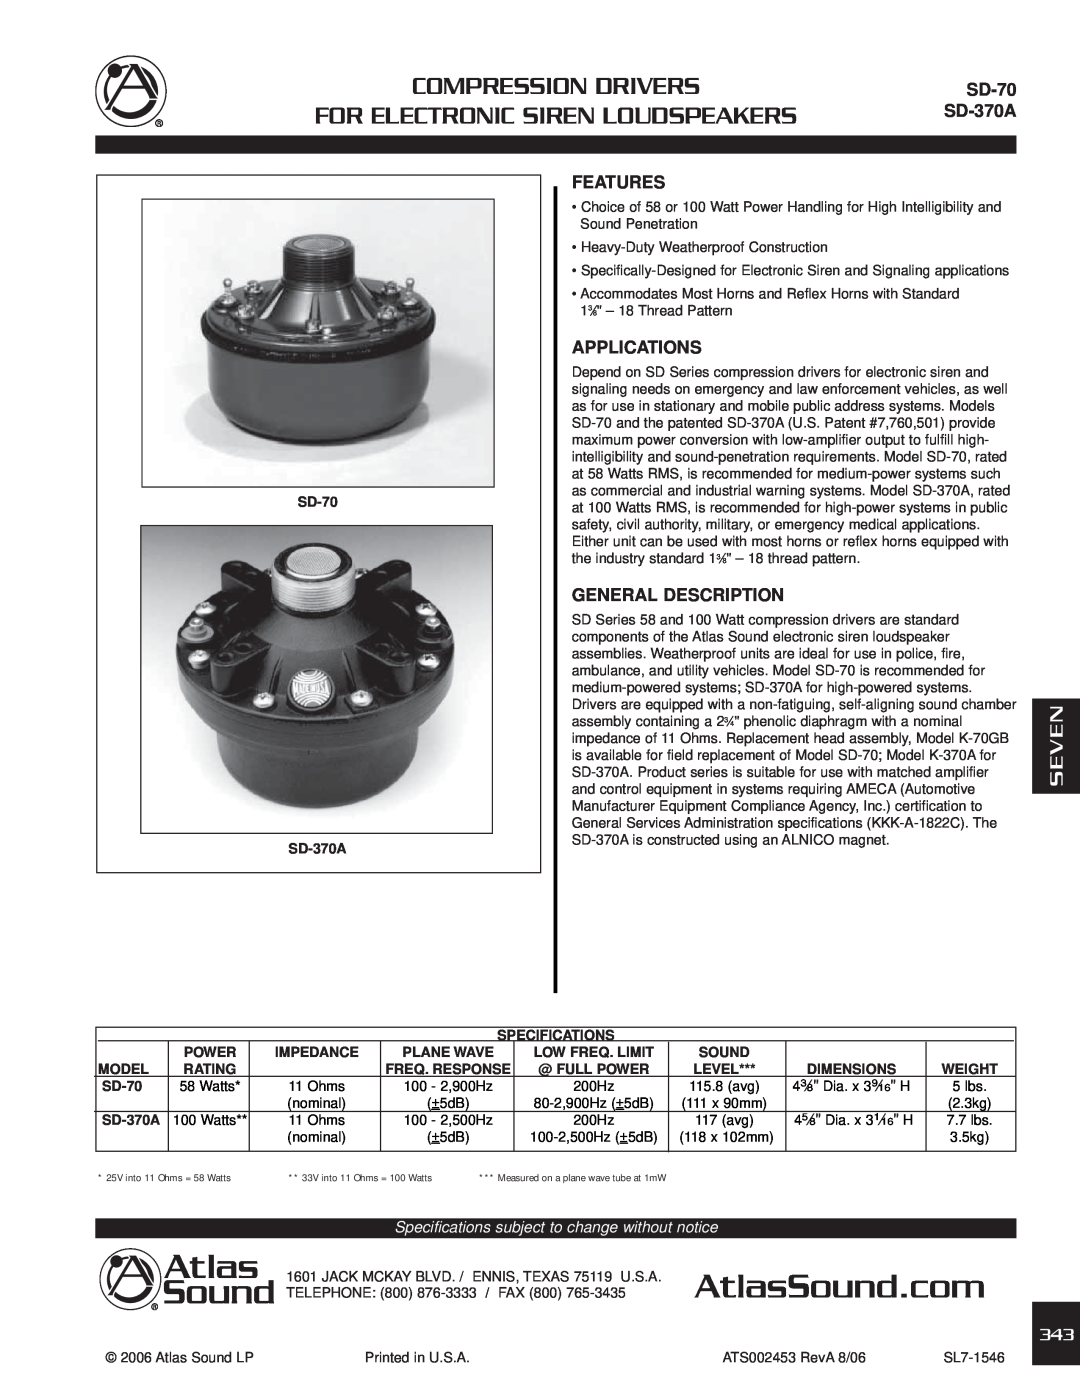 Atlas Sound K-370, SD-370A specifications HPG-370GA, Features, Applications, General Description, Siren Loudspeaker, Seven 